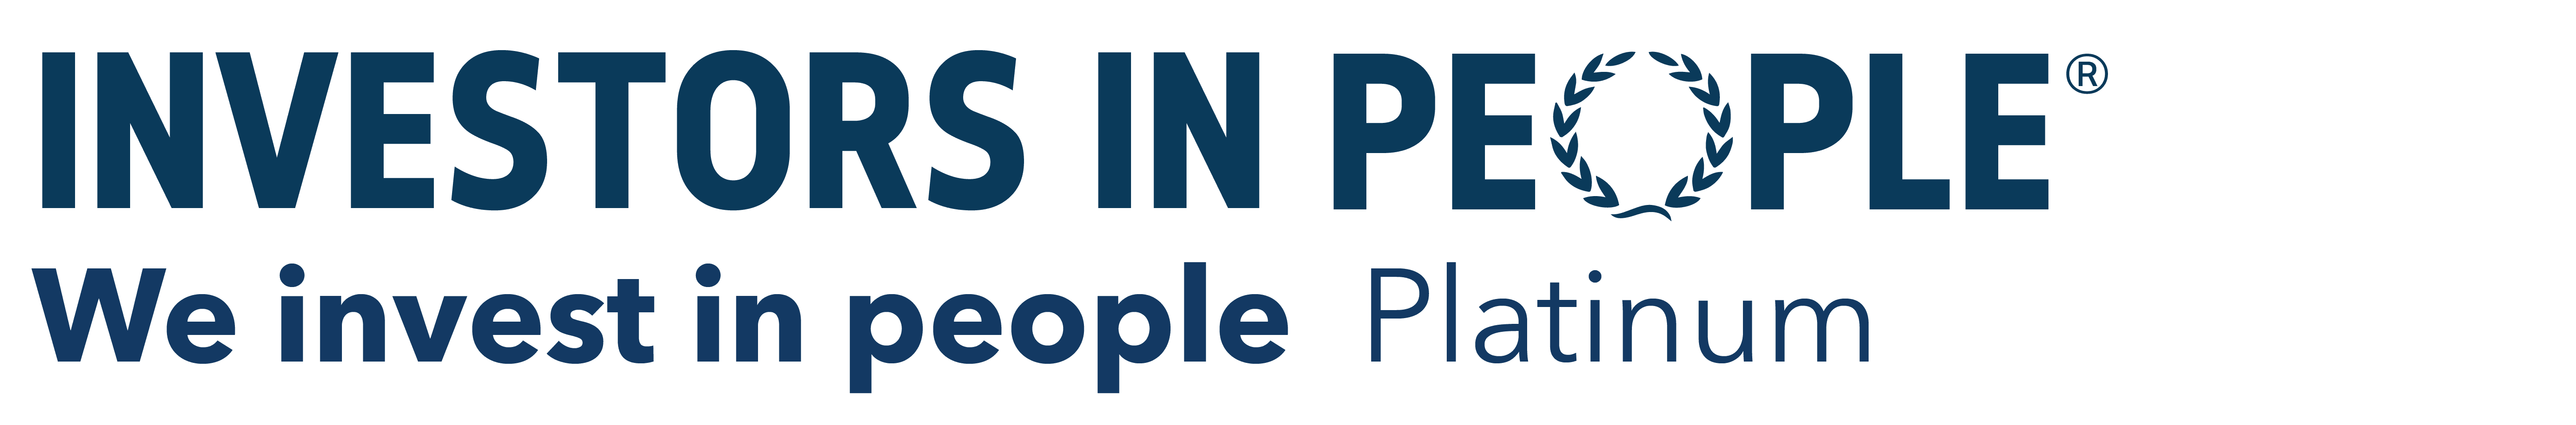 Investors In People logo.